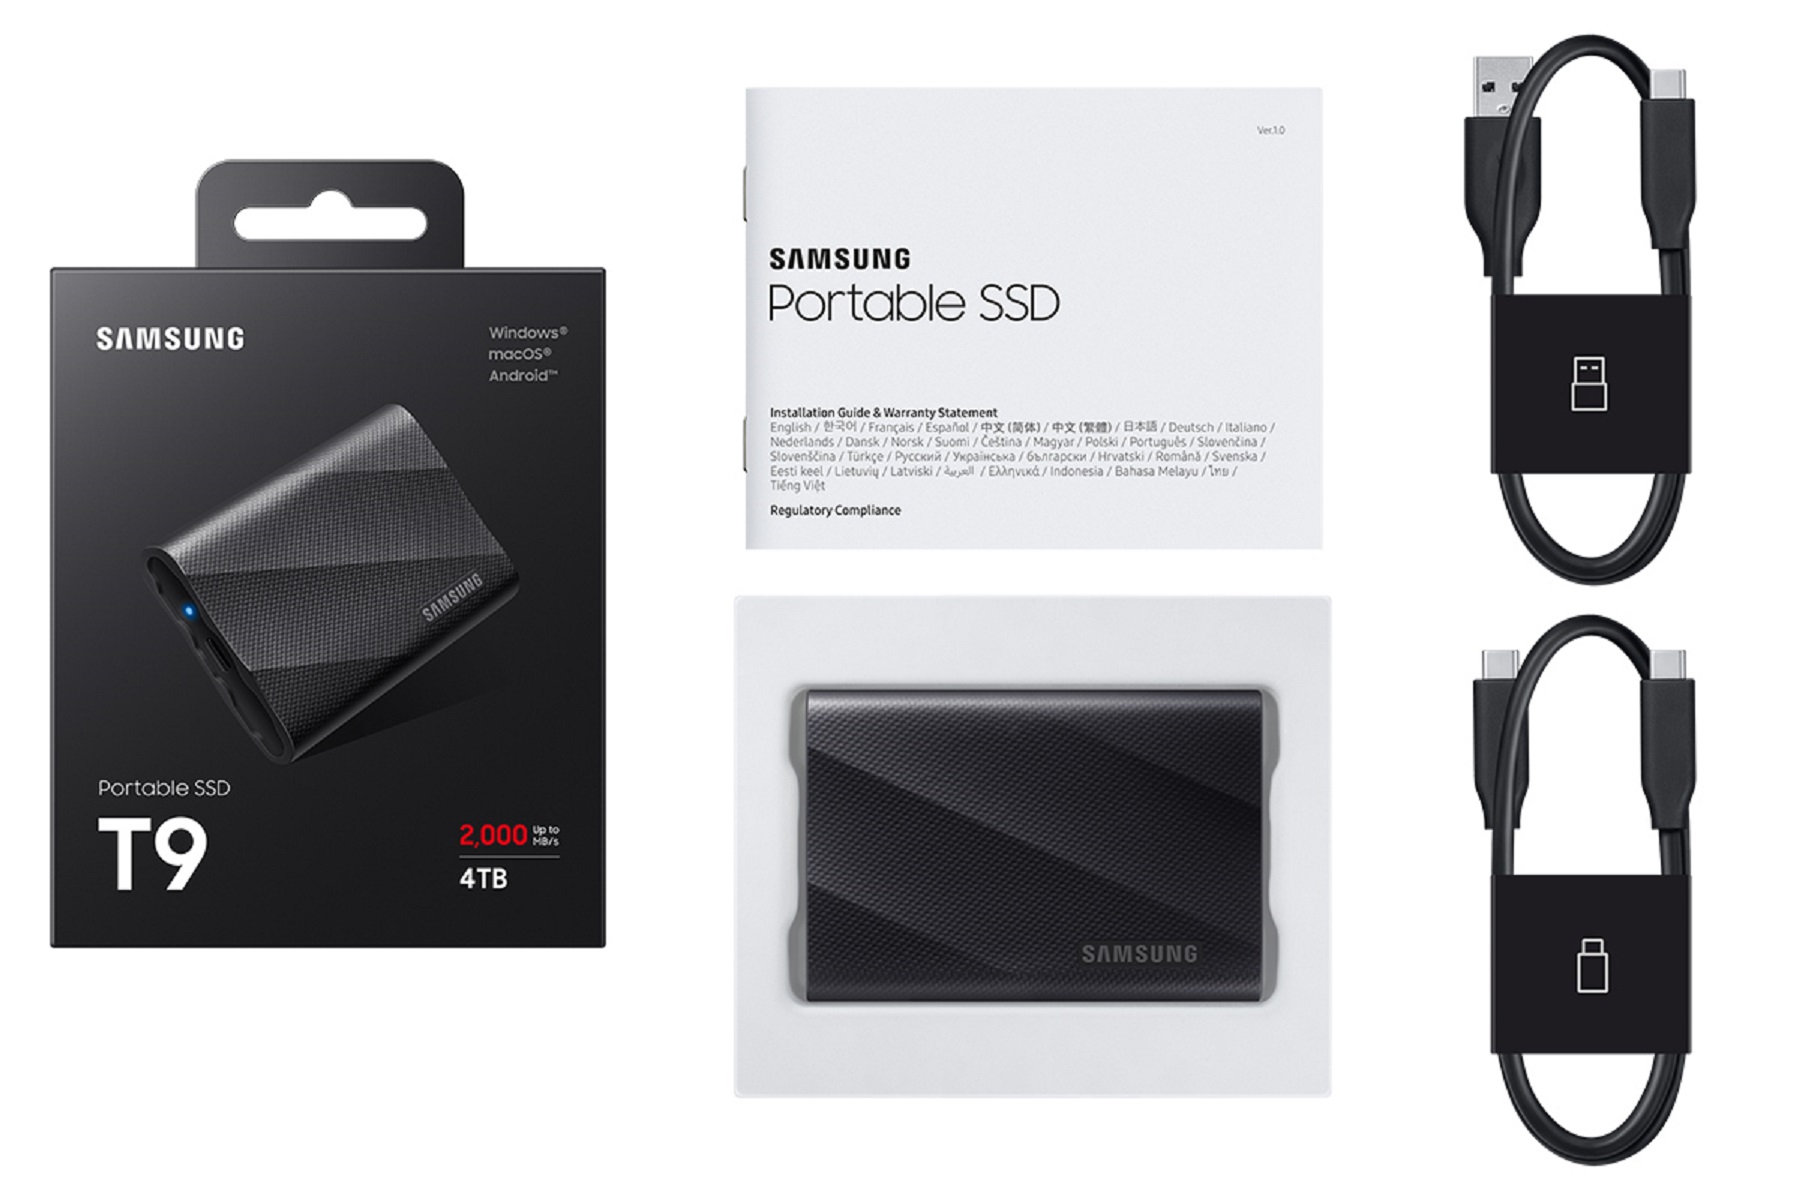 Samsung Announces T9 Portable SSD